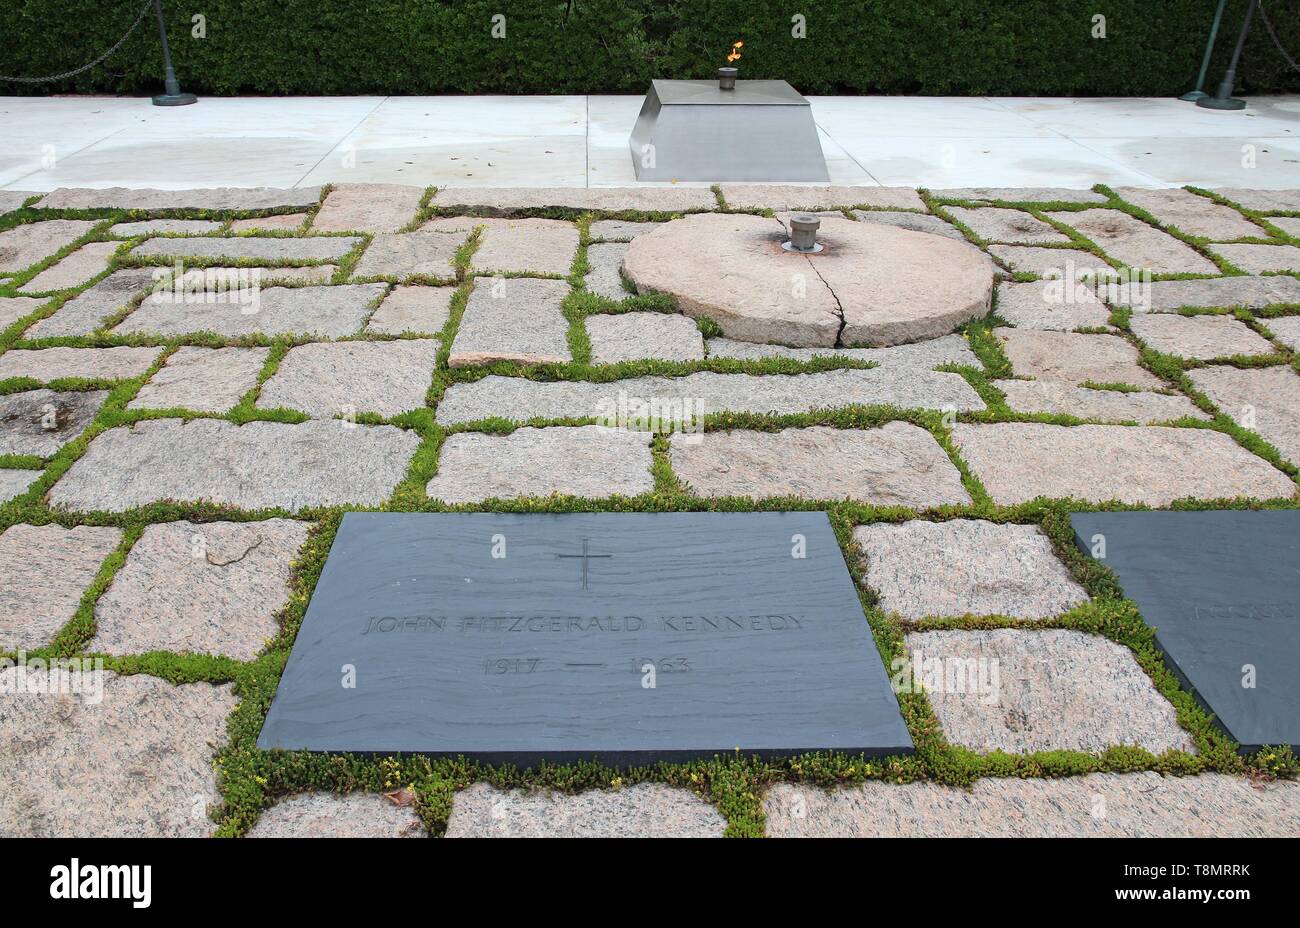 WASHINGTON, USA - JUNE 13, 2013: John Fitzgerald Kennedy grave at Arlington National Cemetery in Washington. JFK was the 35th President of the United  Stock Photo